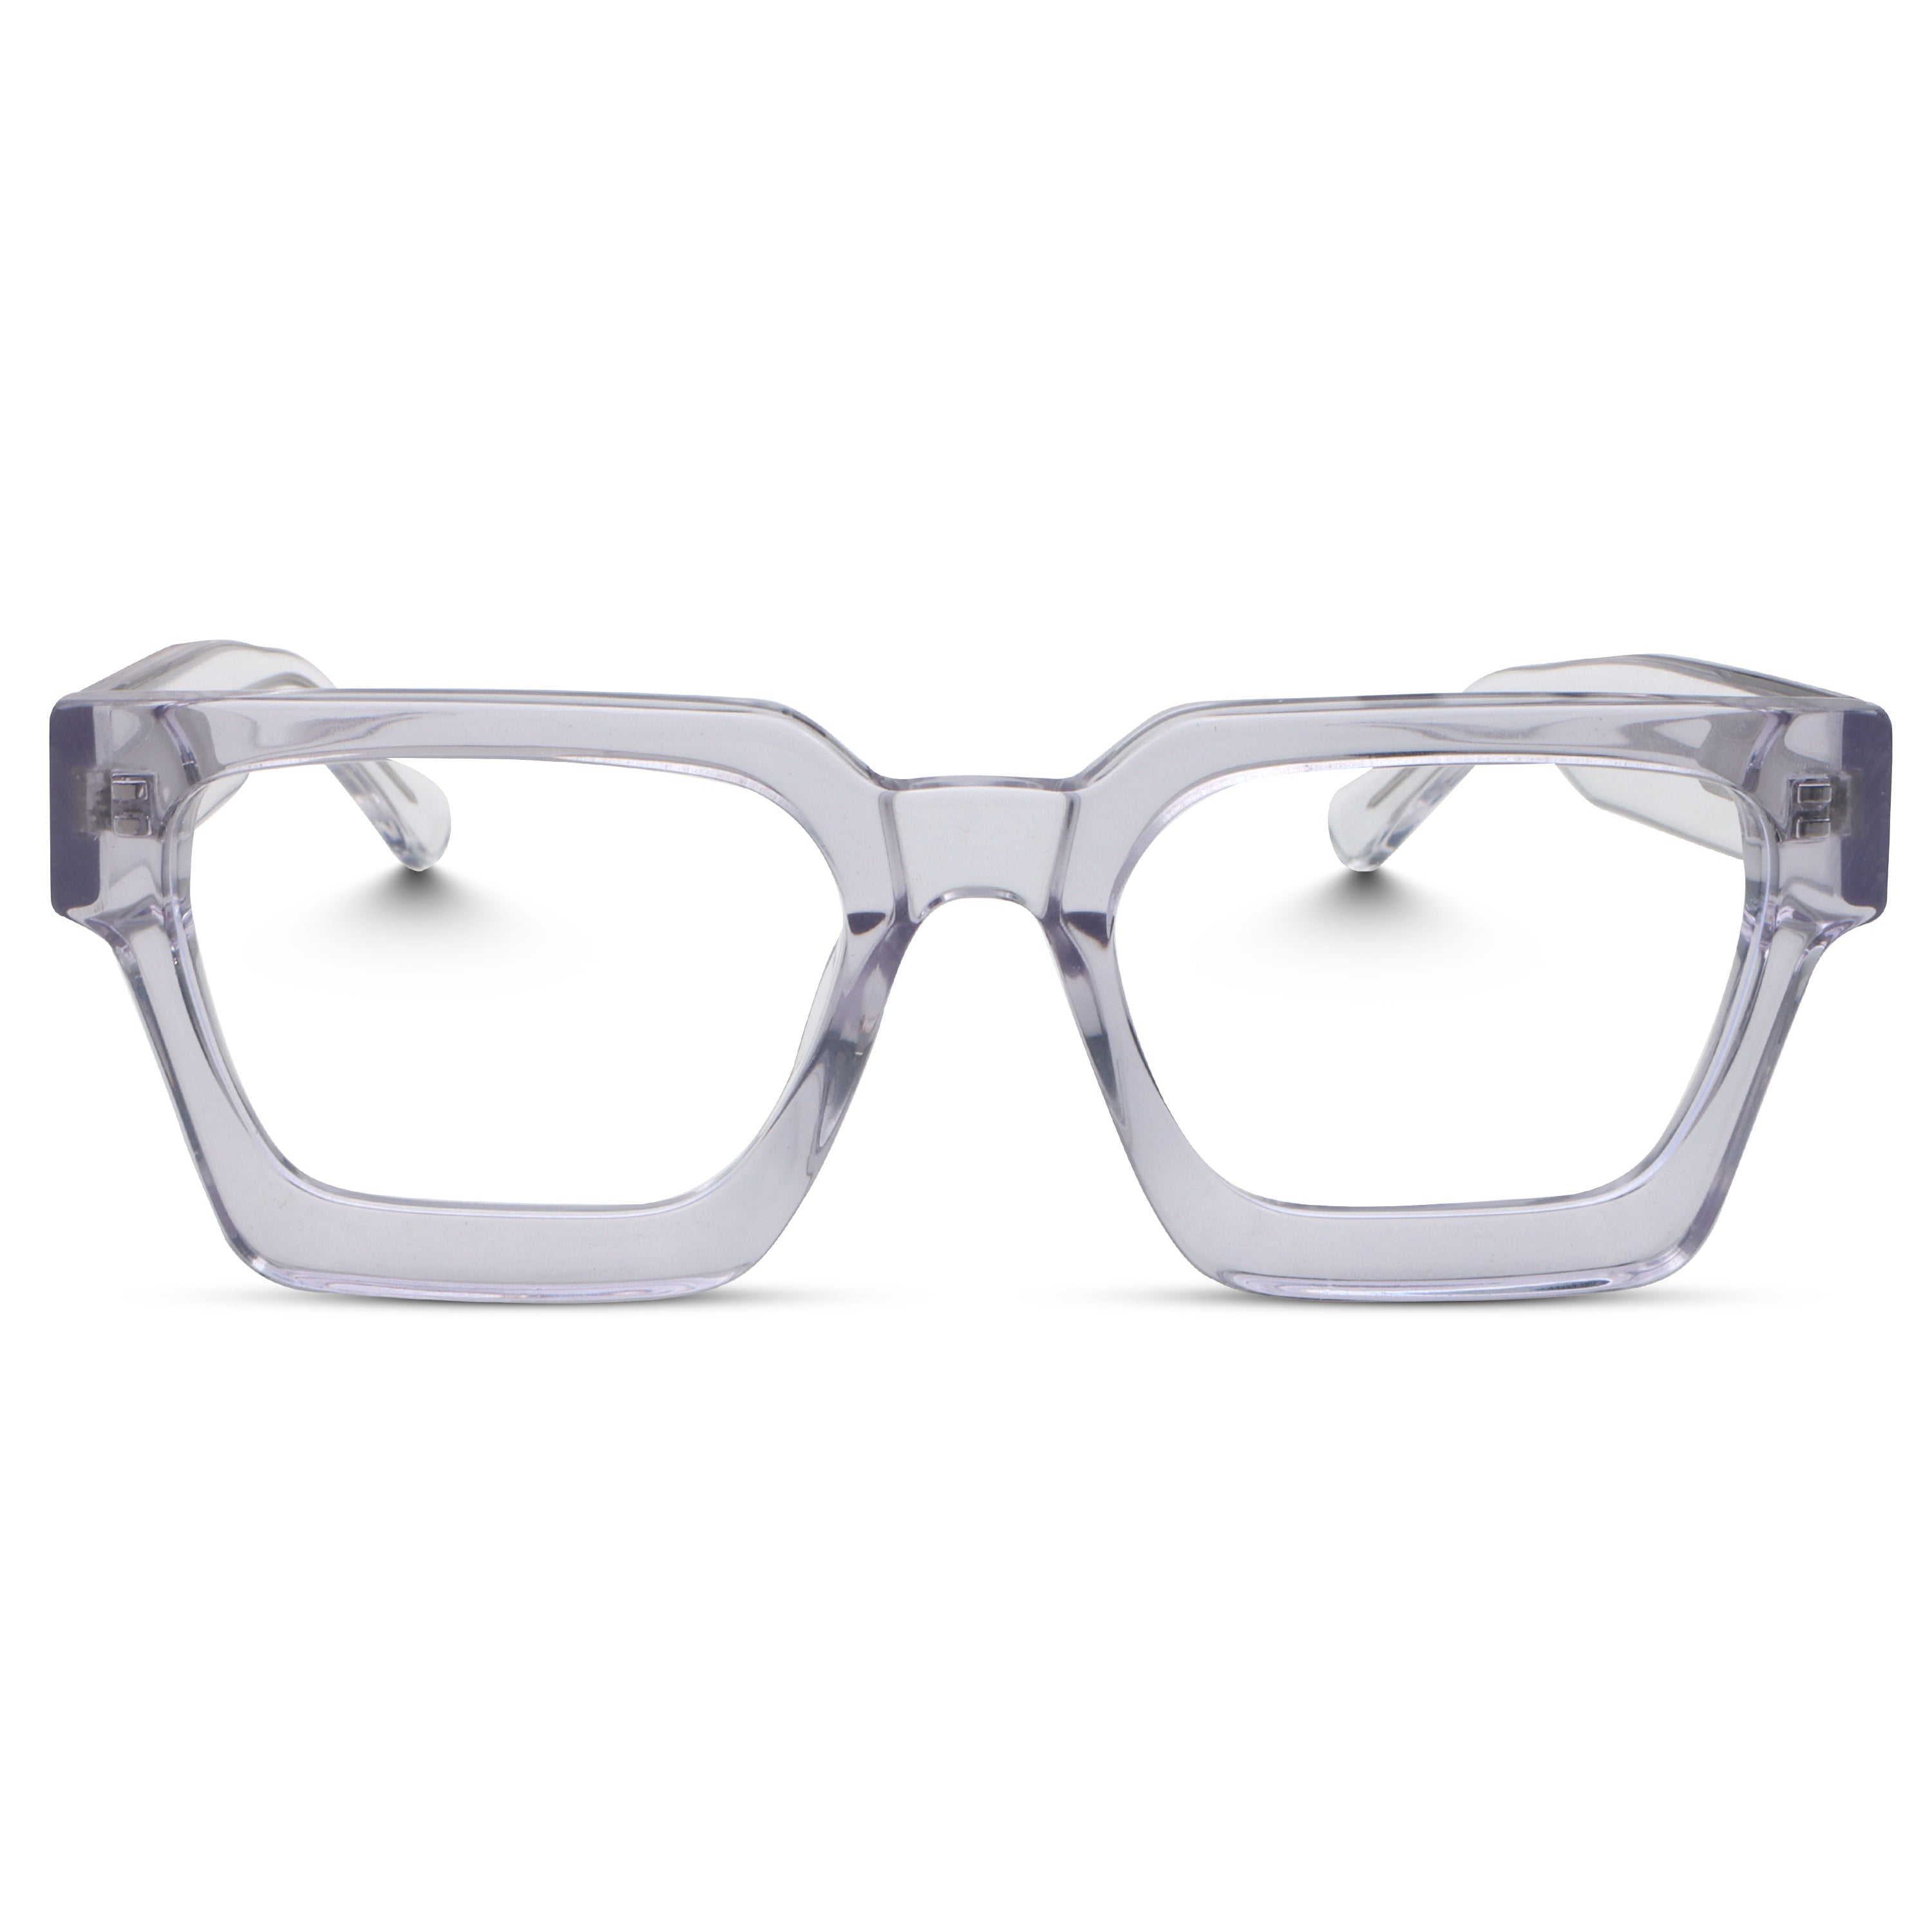 eyeglasses clear frame